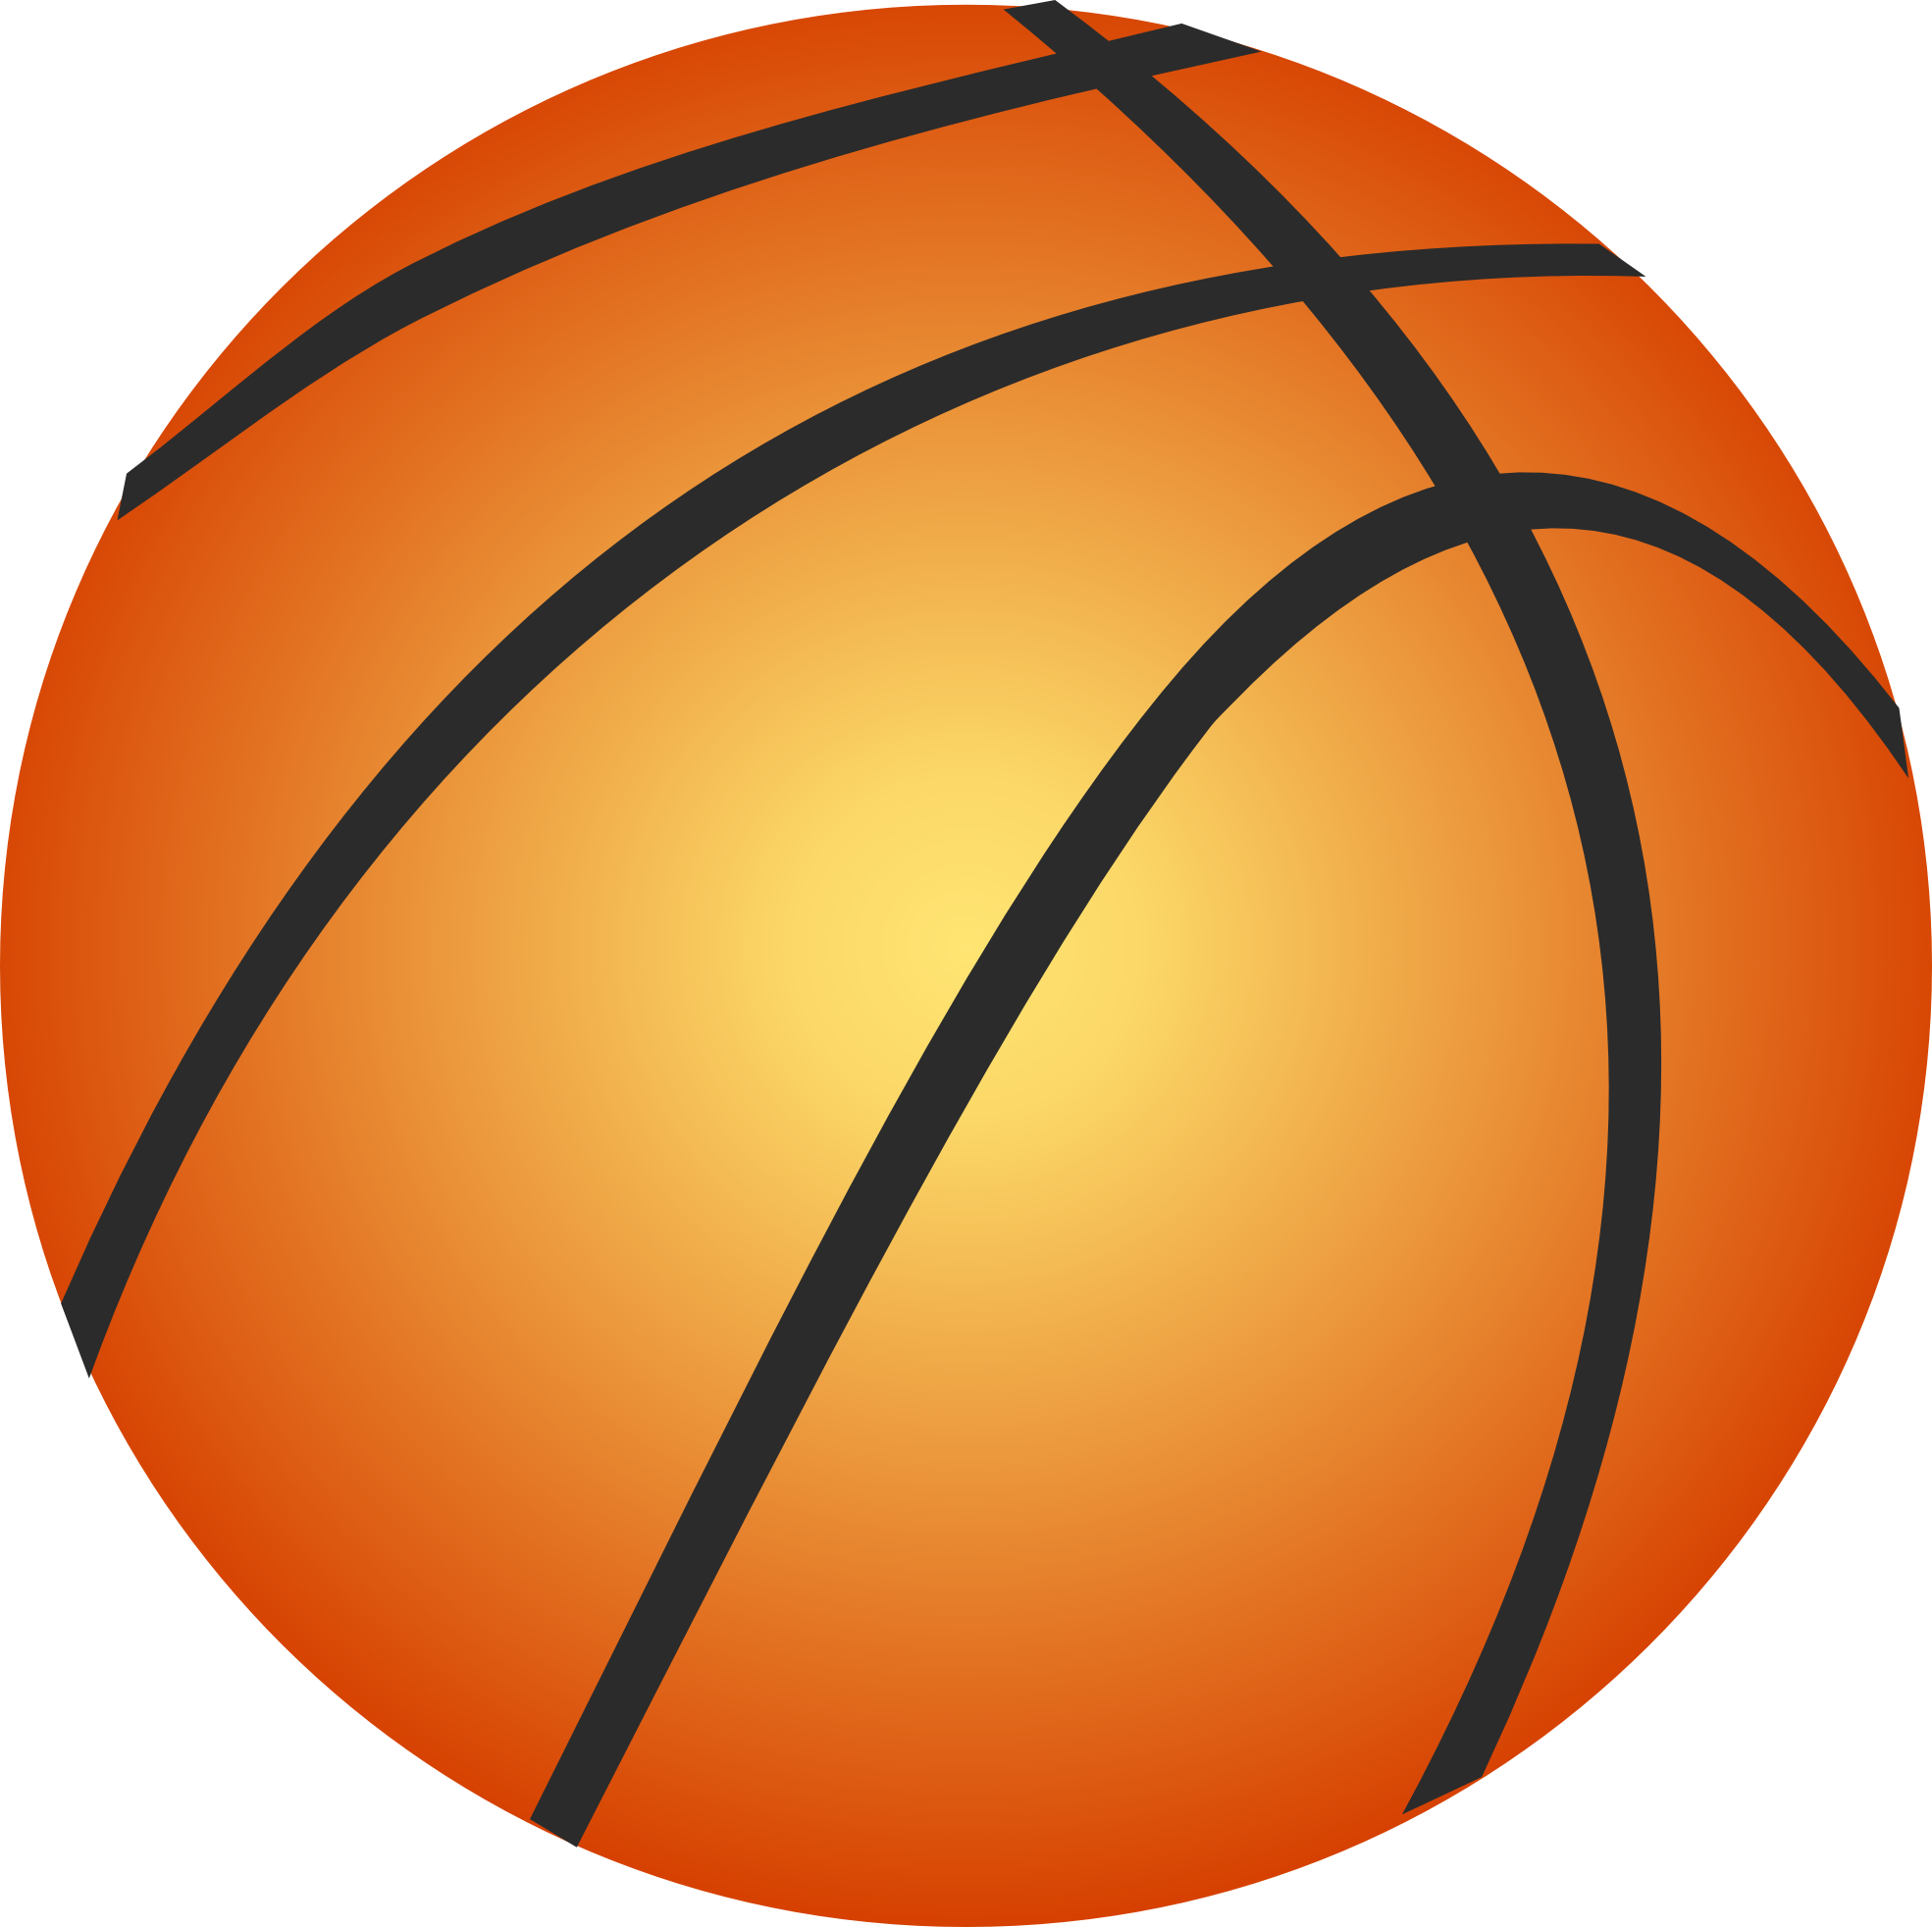 Basketball Animated Clipart